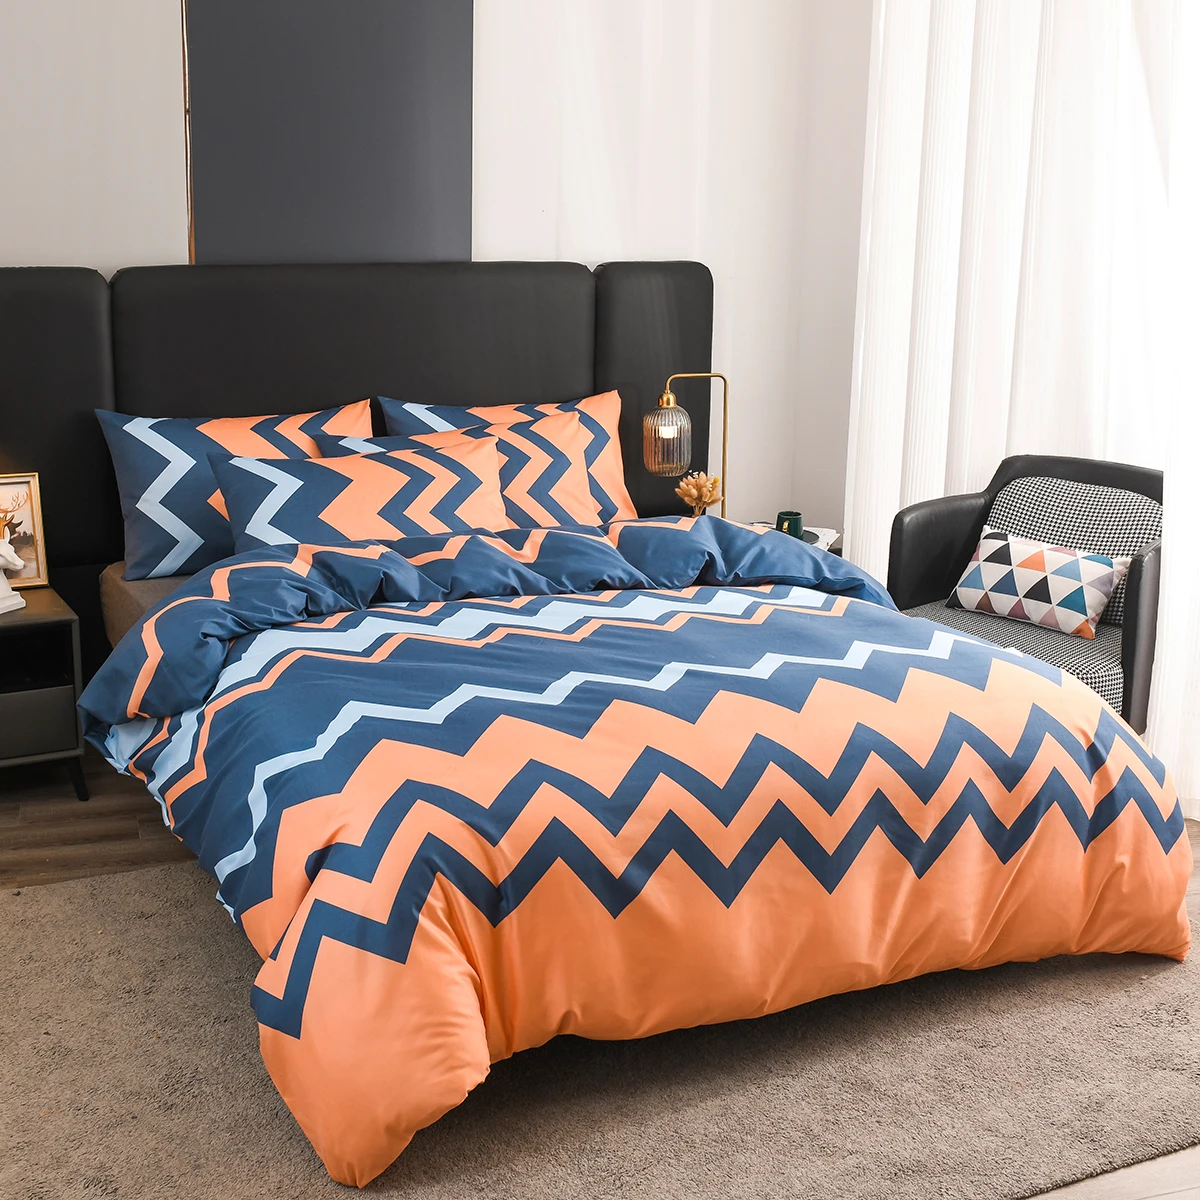 

3 Pieces Comforter Set Retro Abstract Blue Orange Geometric Zig Zag Duvet Cover,Soft Texture Bedding Sets Queen King Double Size